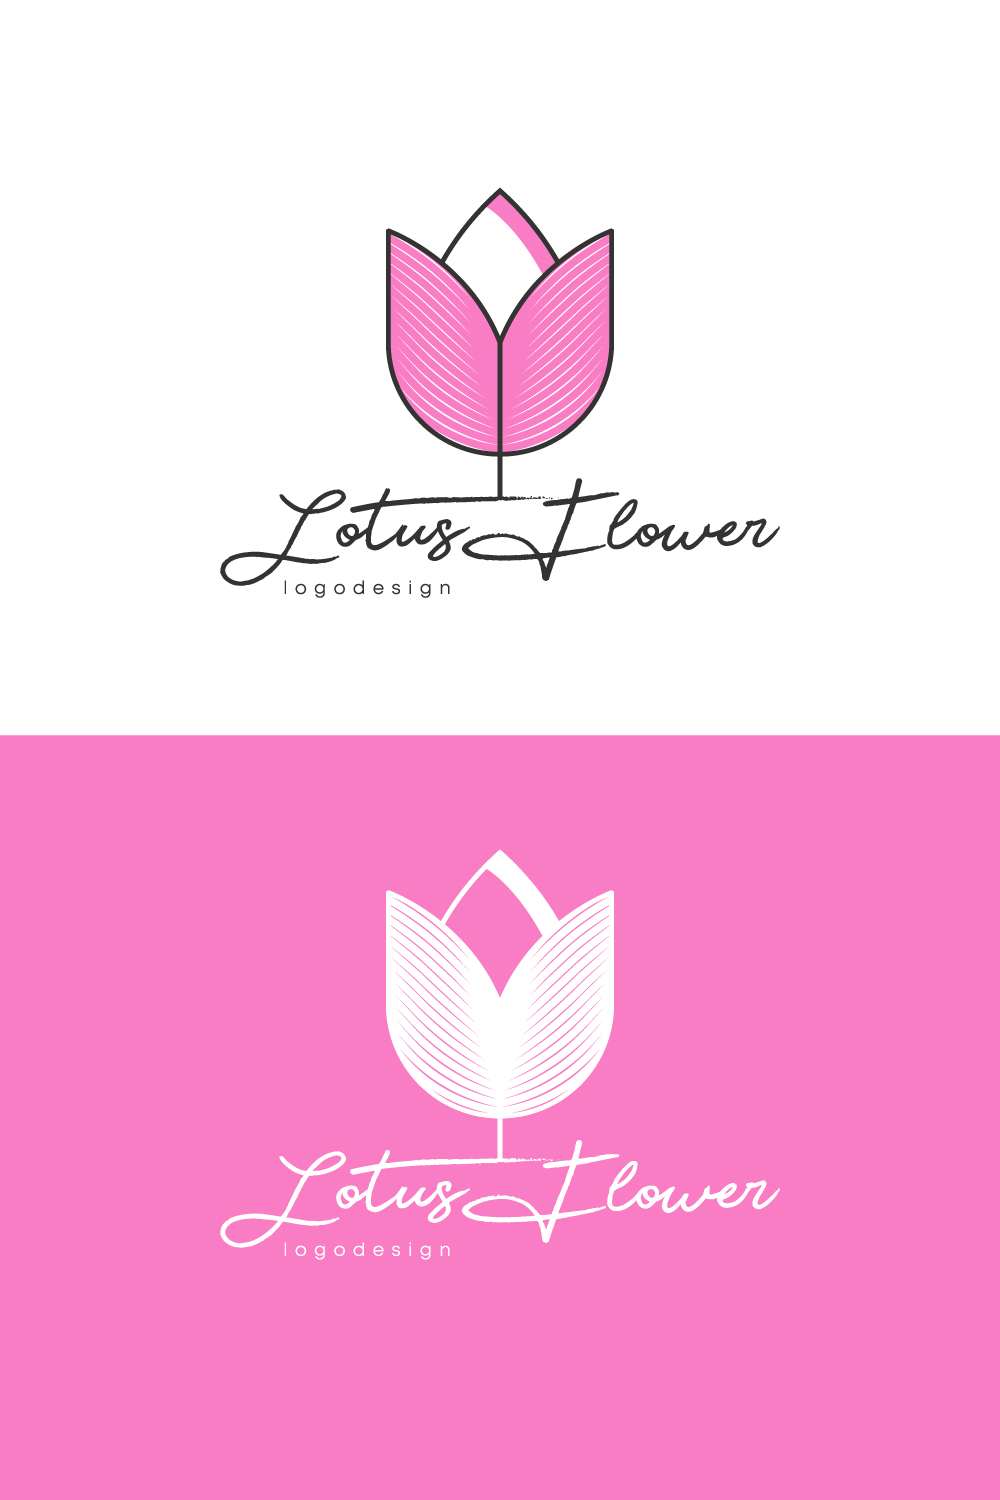 Lotus logo pinterest preview image.